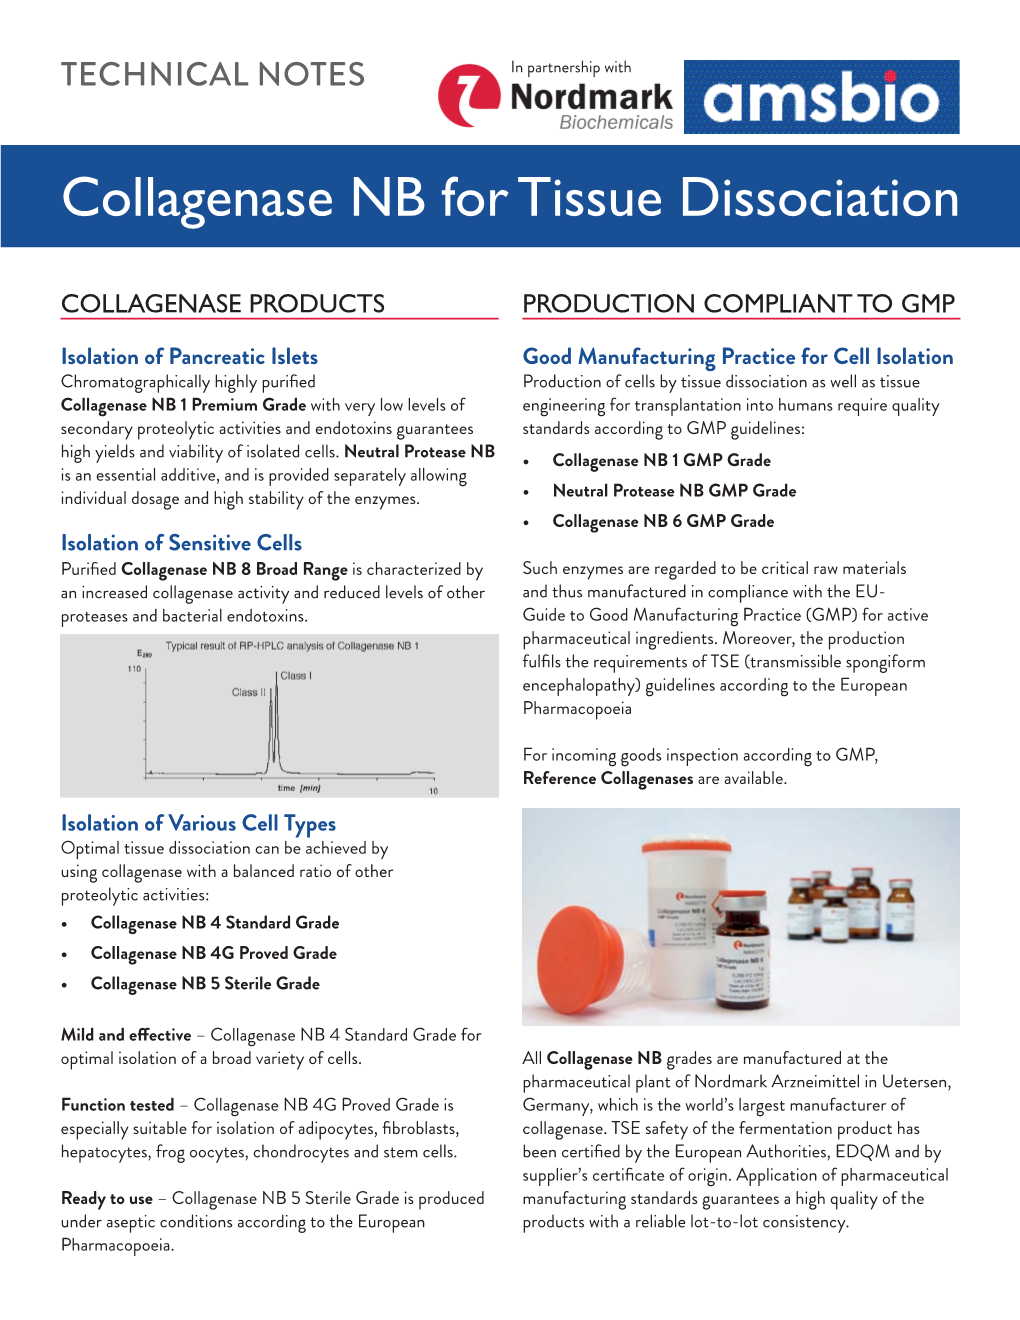 Collagenase NB for Tissue Dissociation